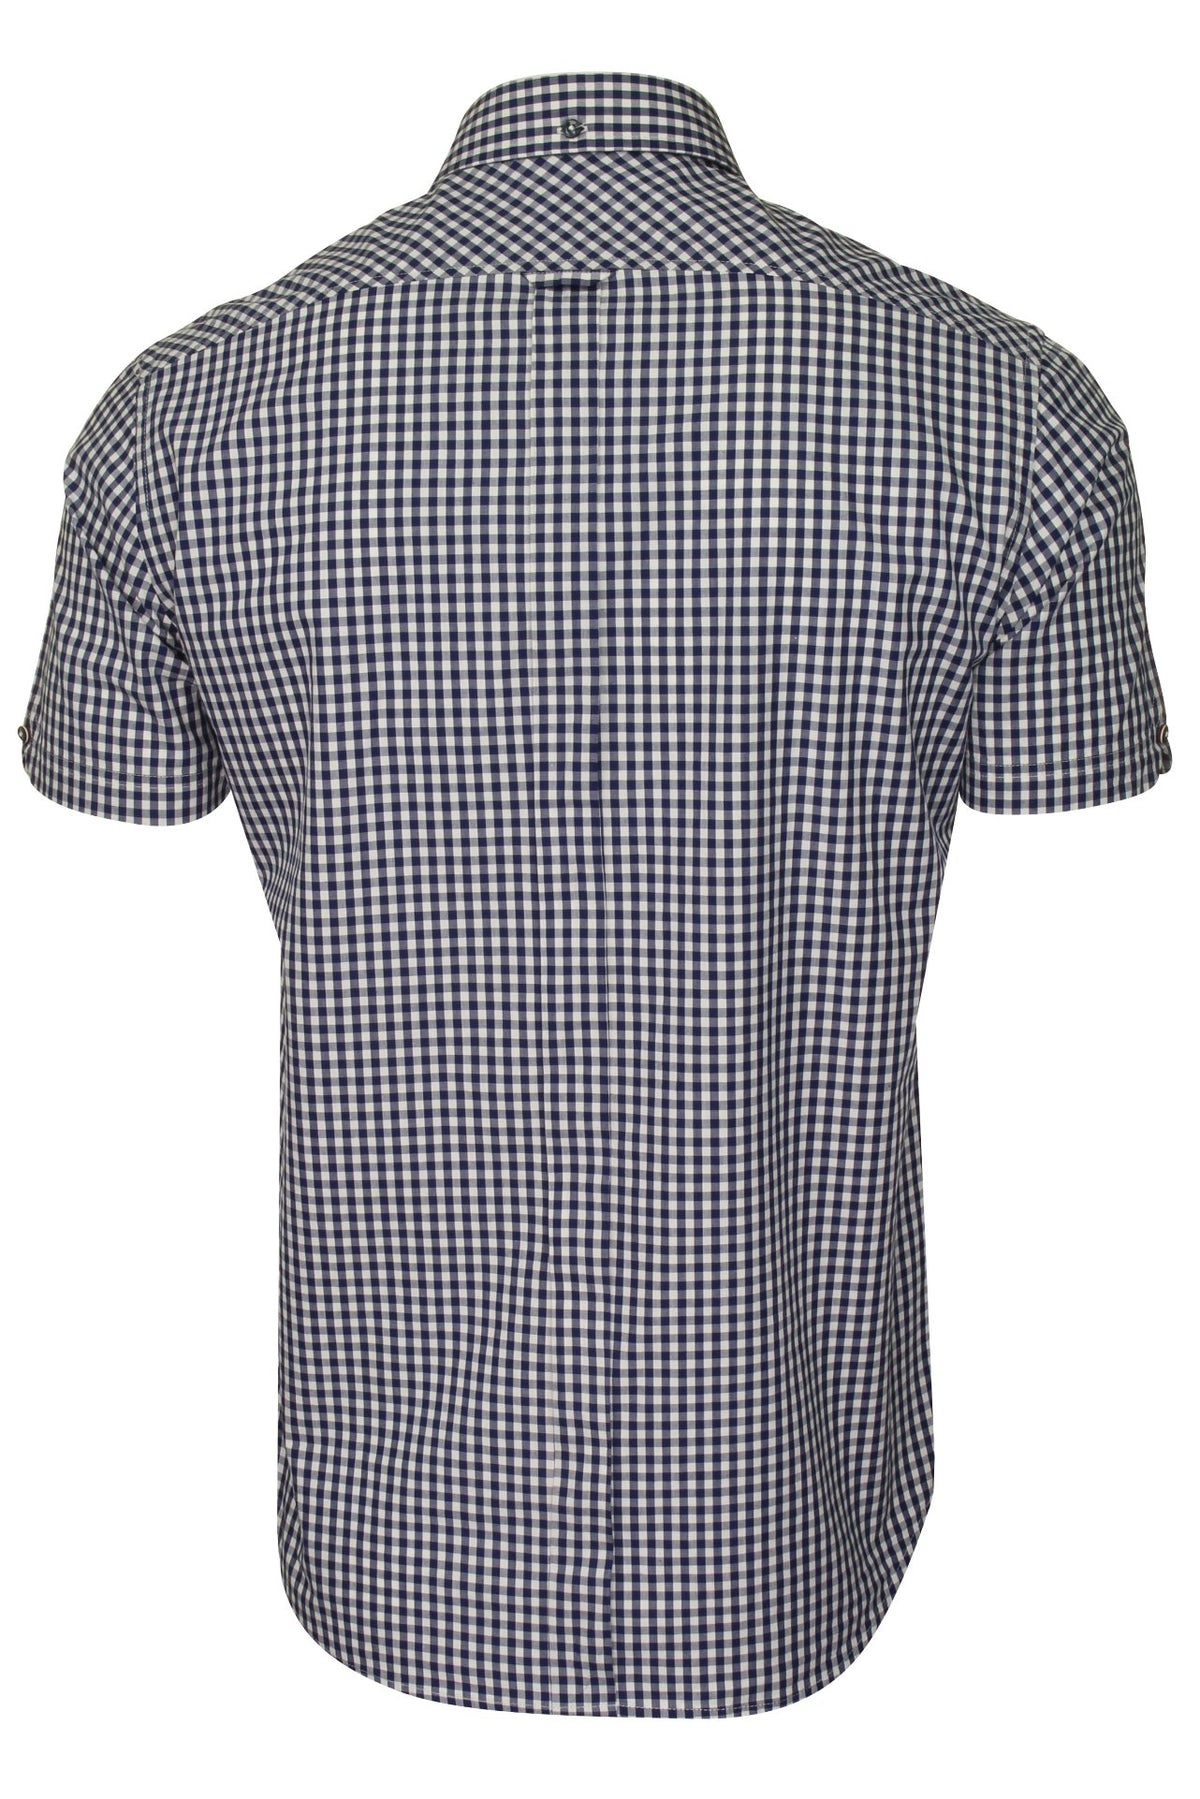 Ben Sherman Mens Signature Gingham Shirt - Short Sleeved, 03, 59142, Dark Blue